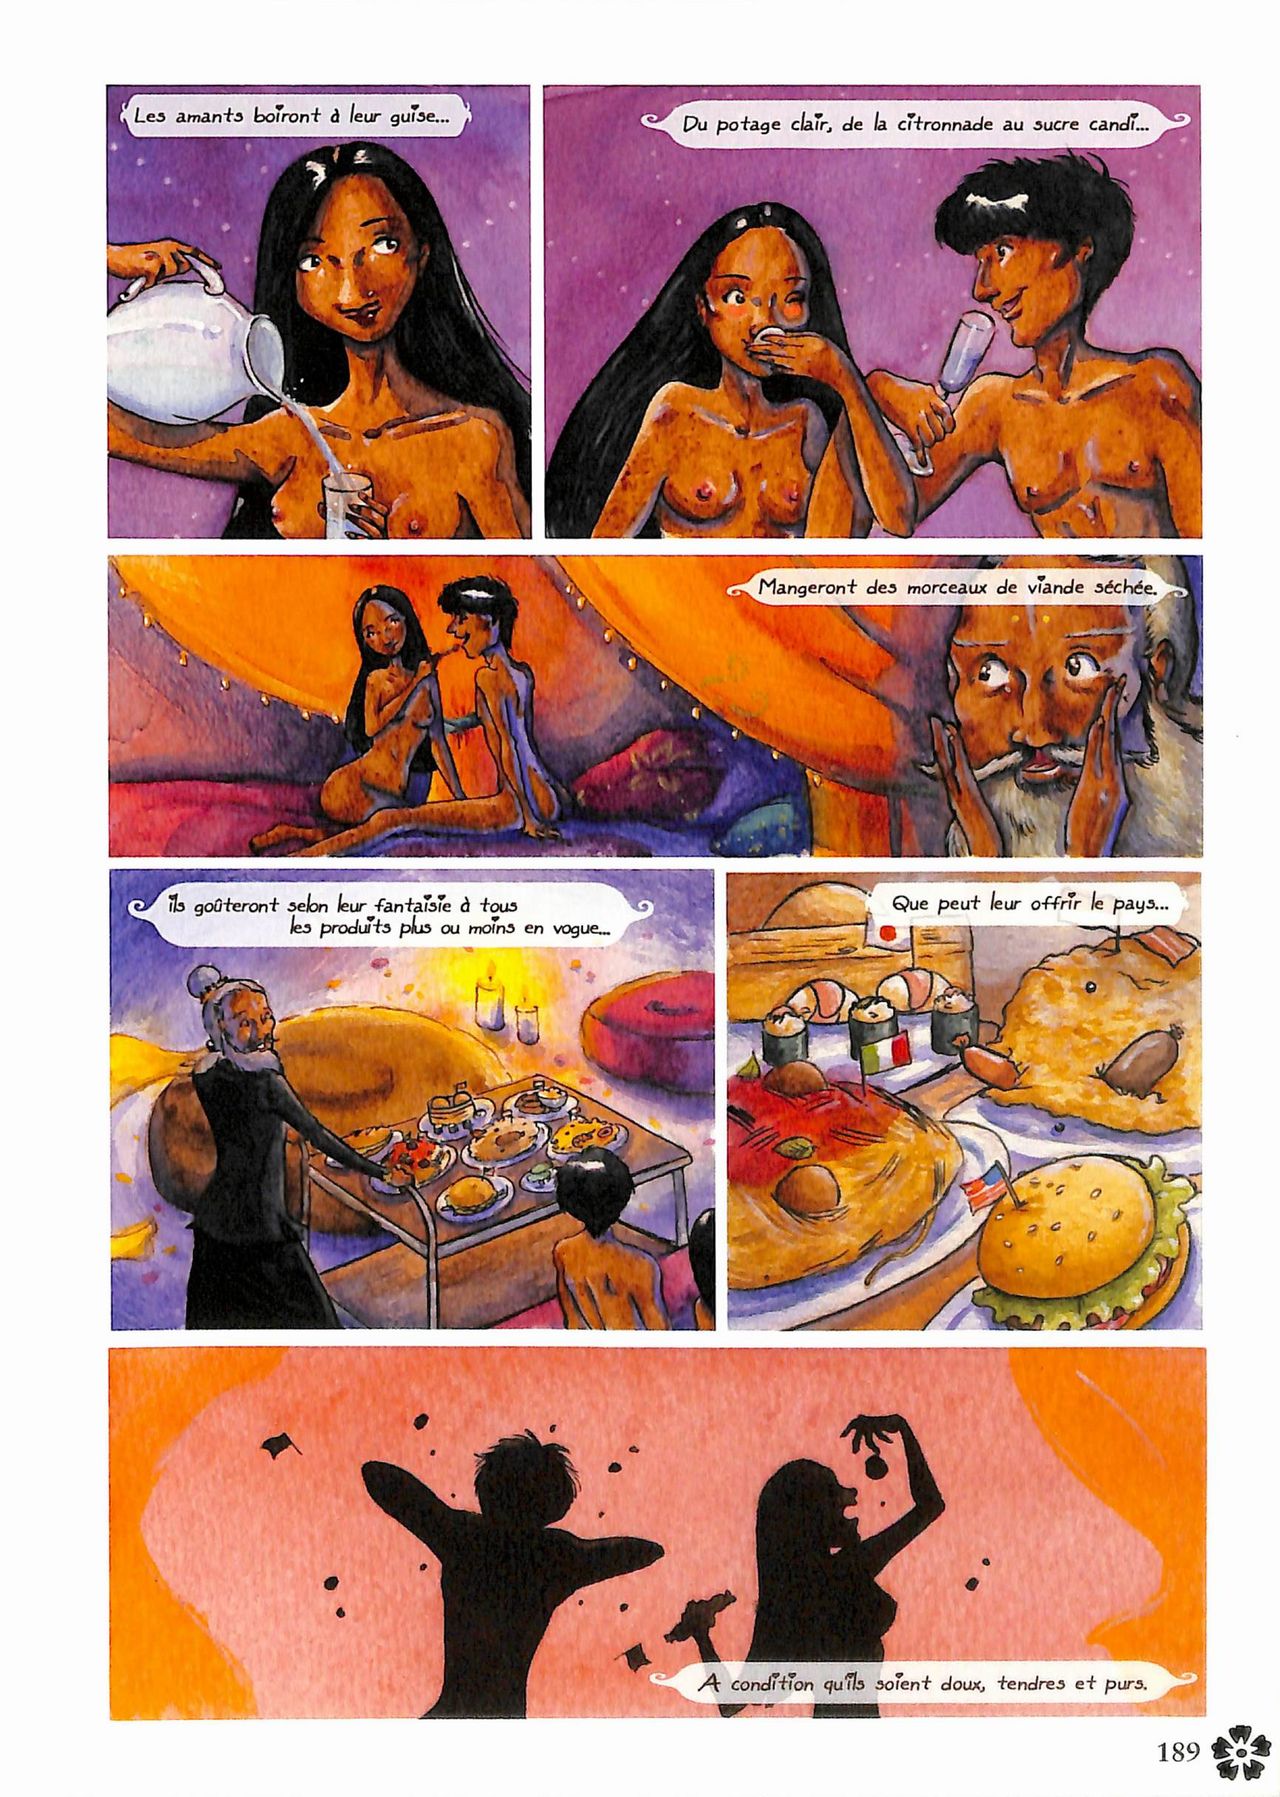 Kama Sutra en bandes dessinées - Kama Sutra with Comics numero d'image 189